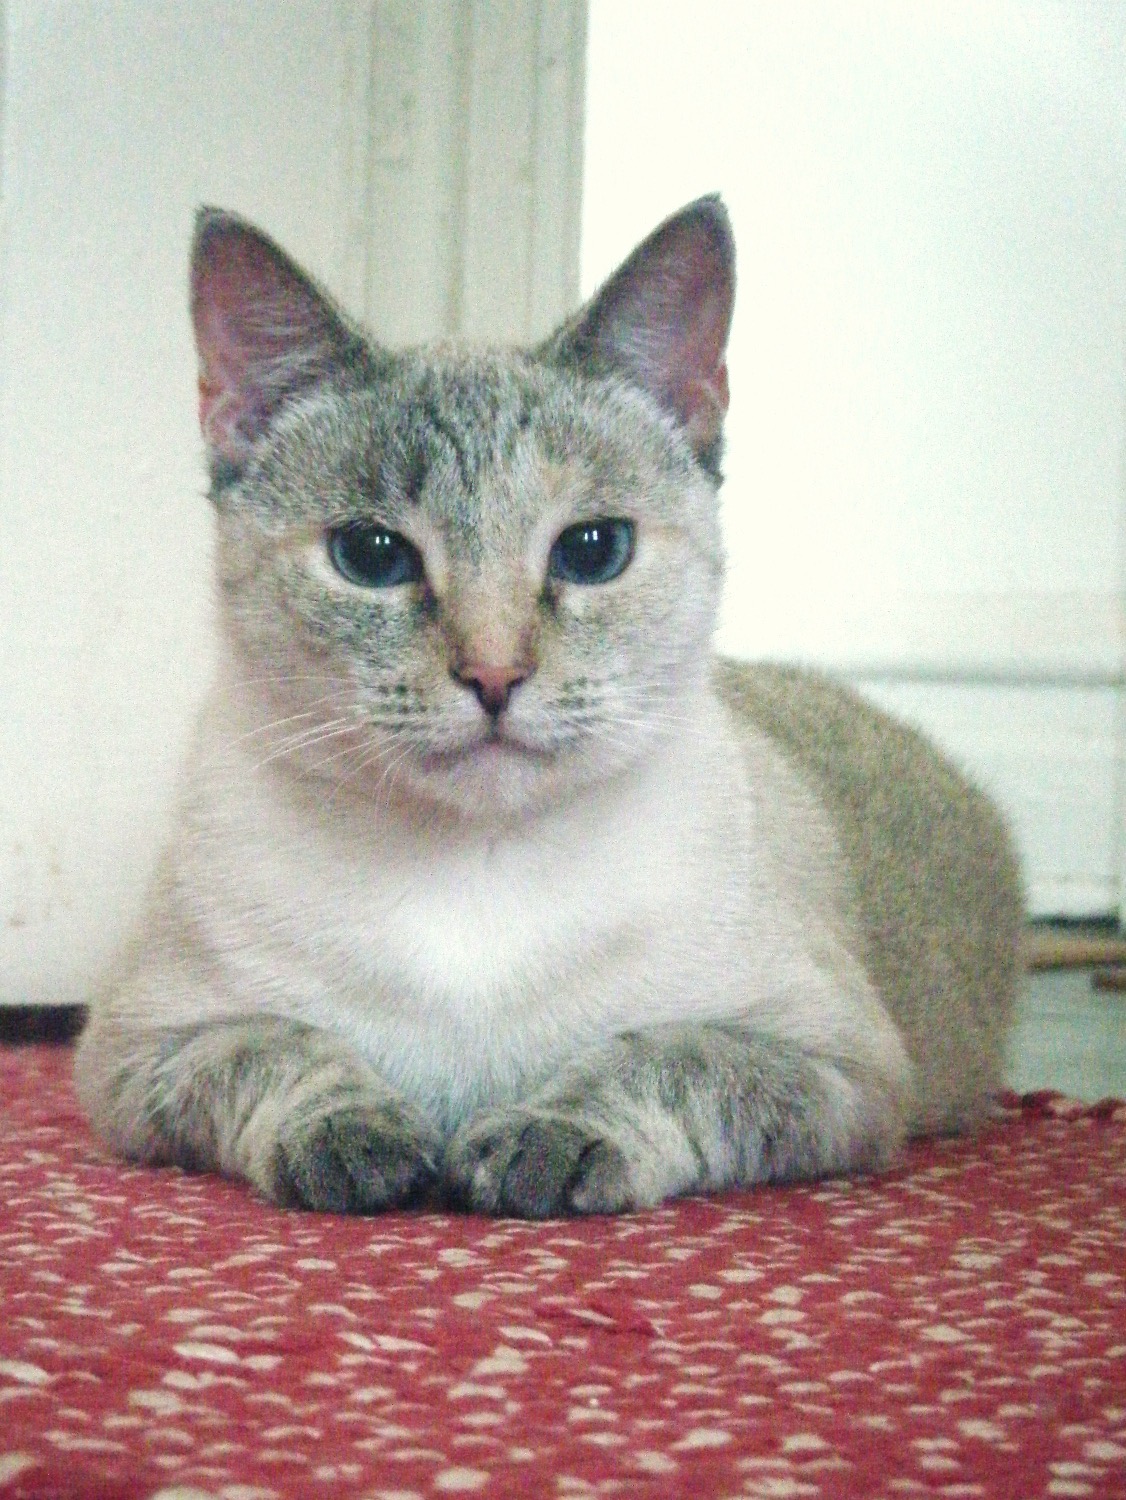 Olympia, the grey cat lying on the floor.